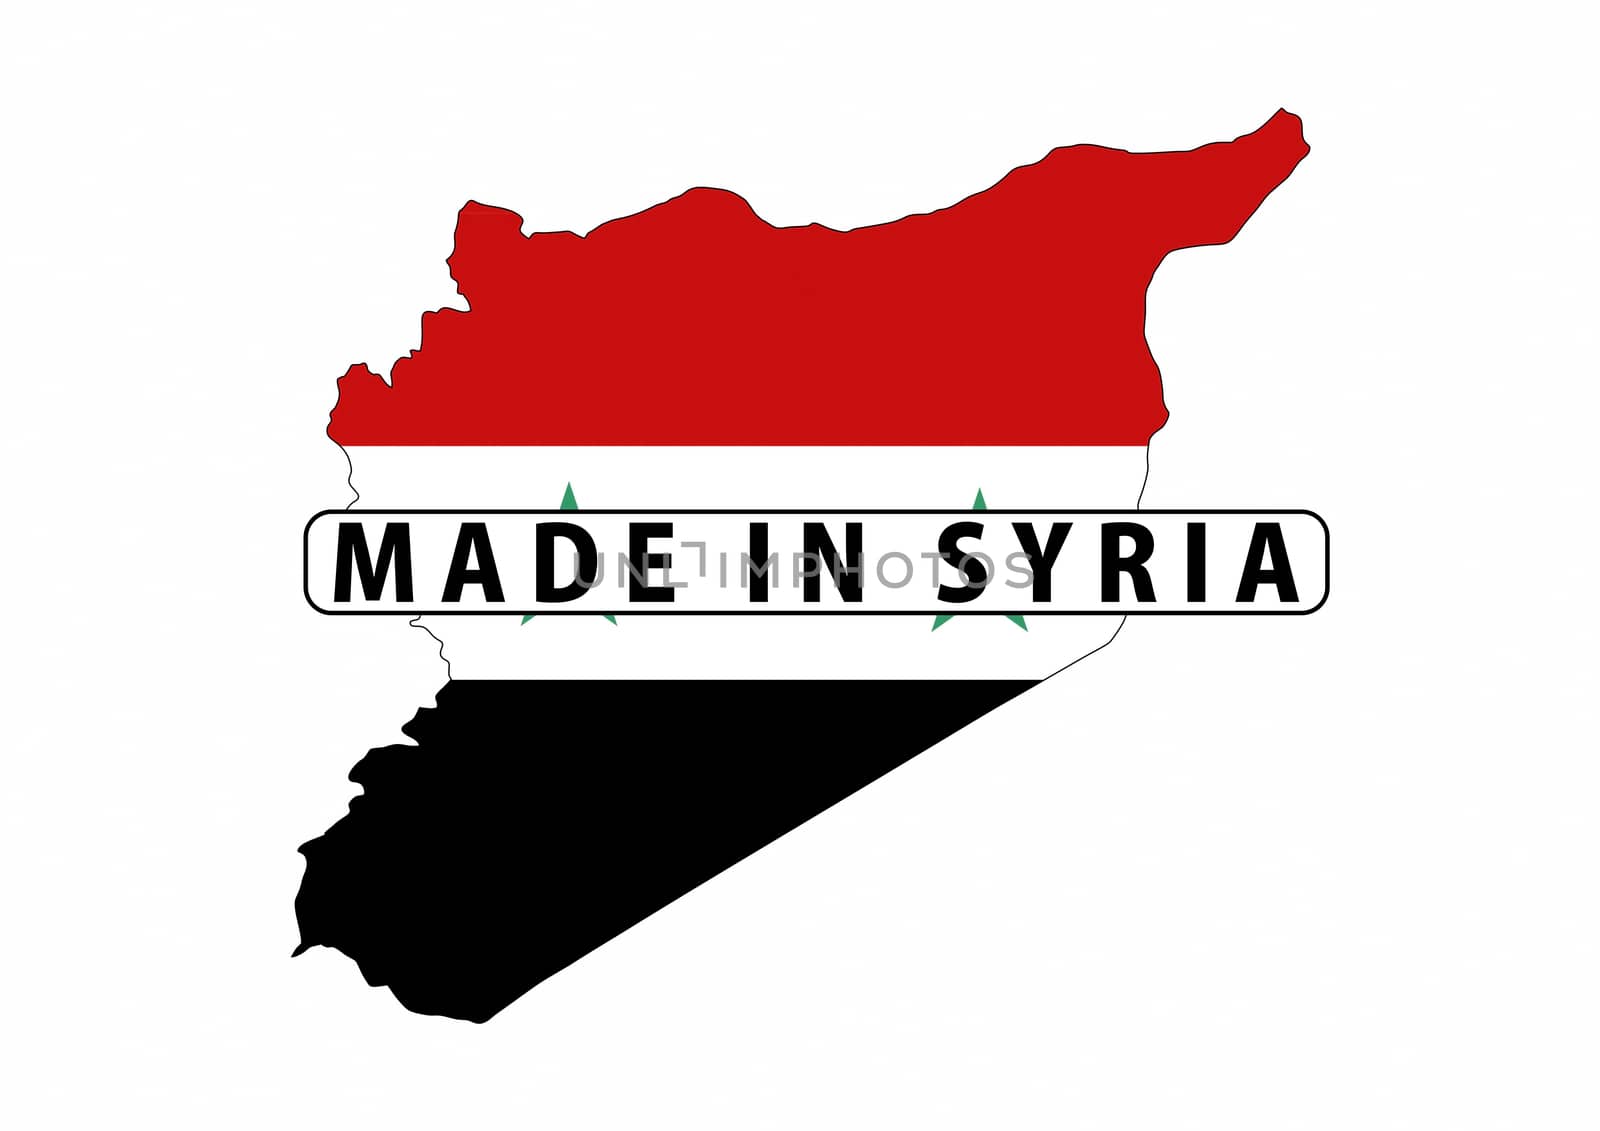 made in syria by tony4urban